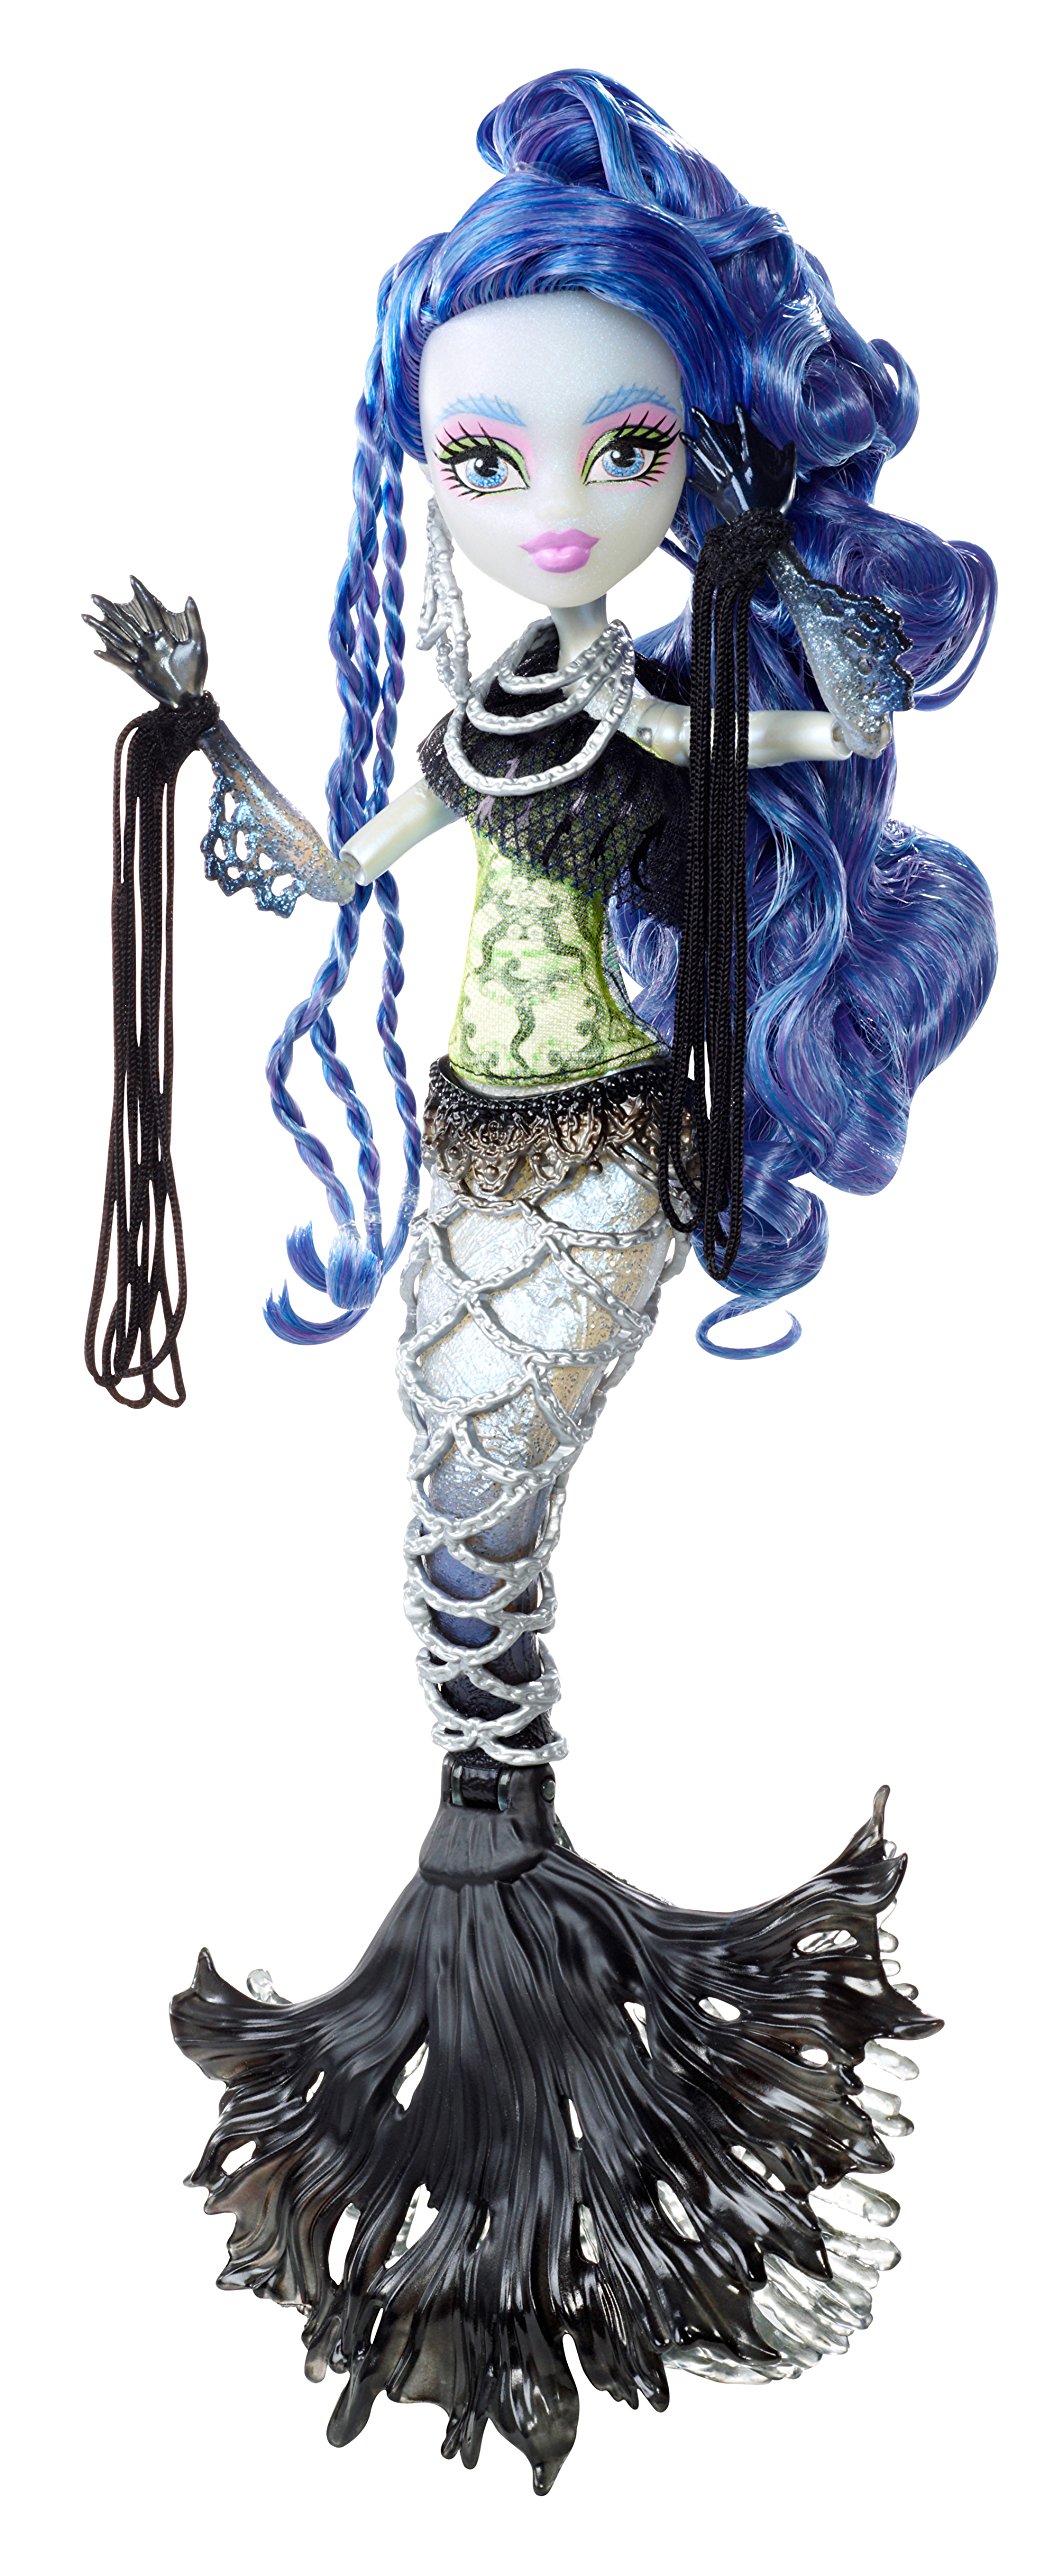 Monster High Freaky Fusion Siren von Boo Doll [UK Import]